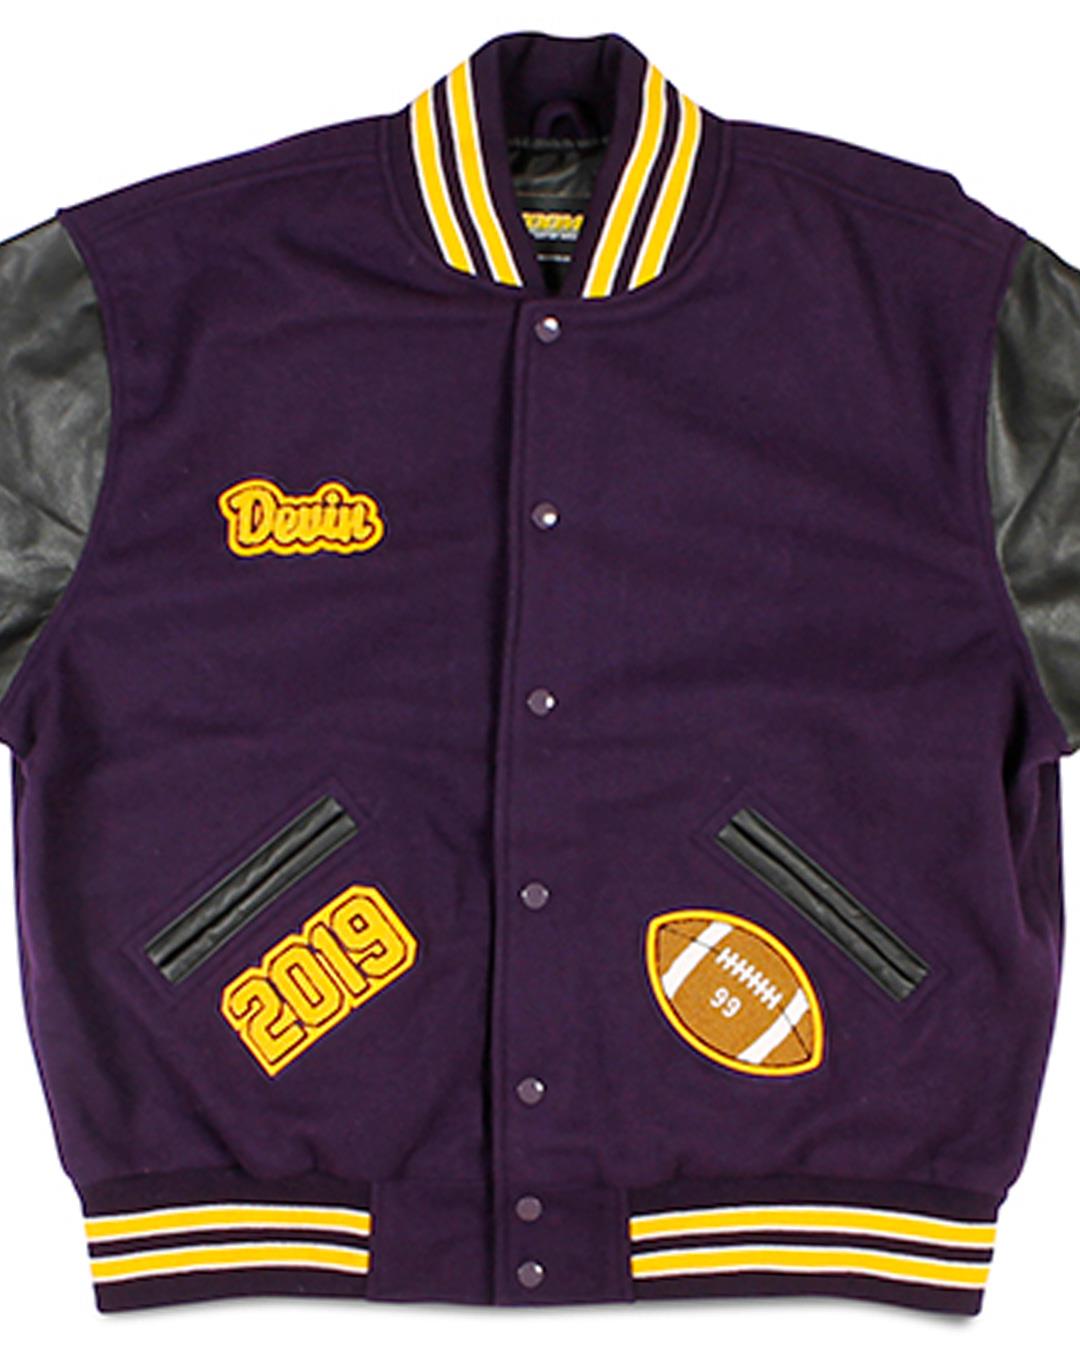 Hanford High School Letterman Jacket, Richland WA - Front